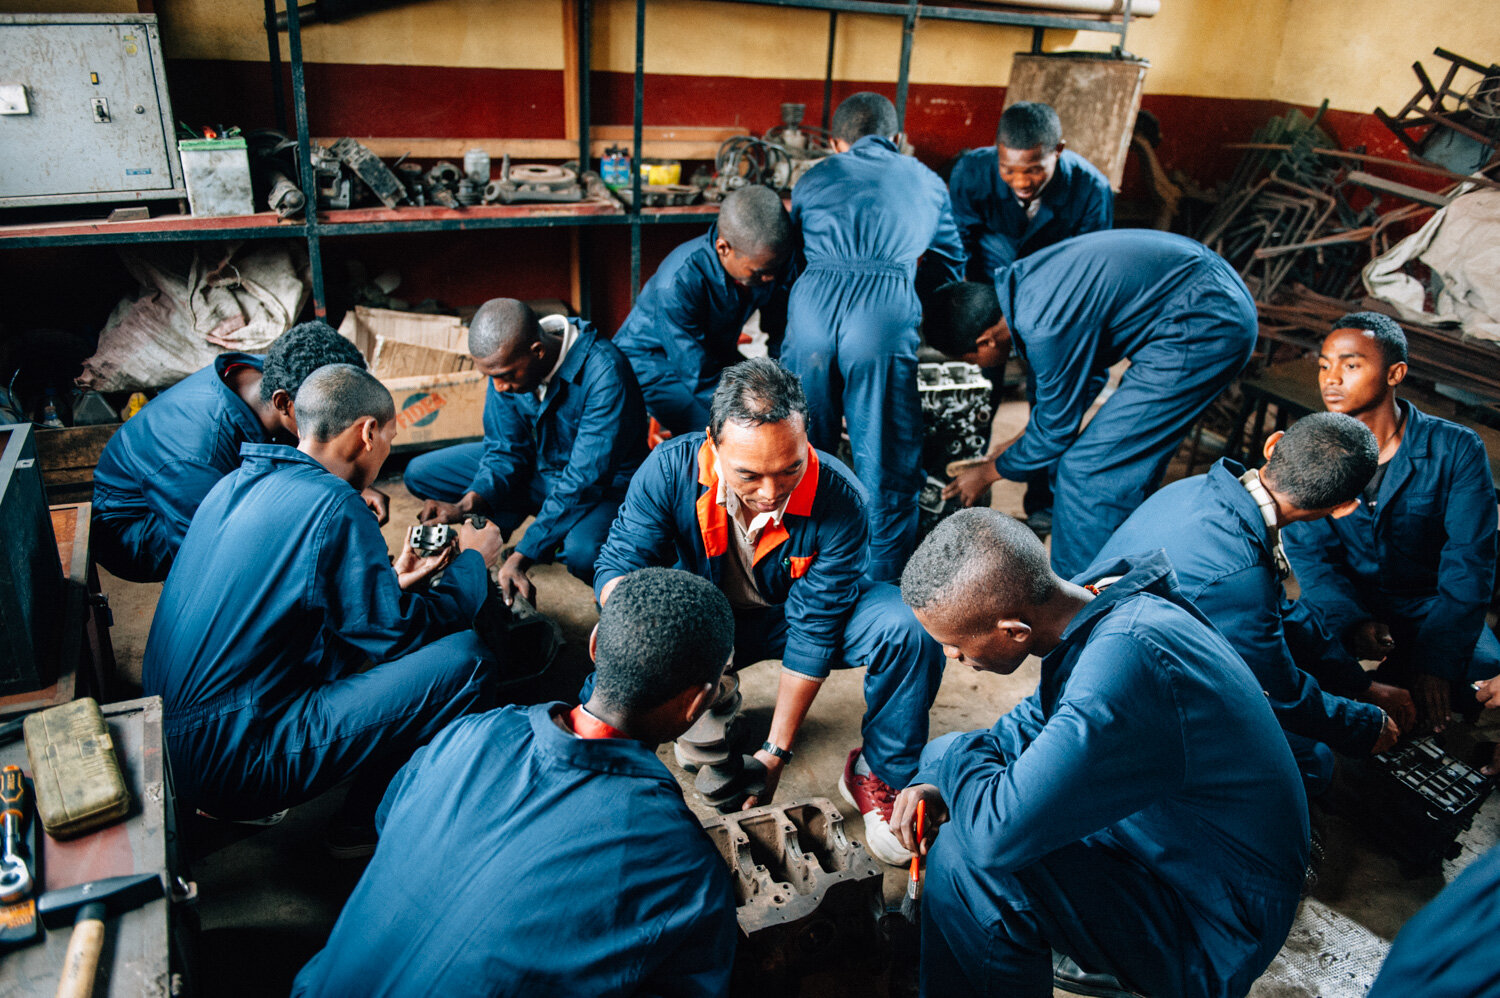  Enfants des rues. Formation professionnelle mécanique. Tananarive. Avril 2018 // Street children. Professional mechanical training. Antananarivo. April 2018. 